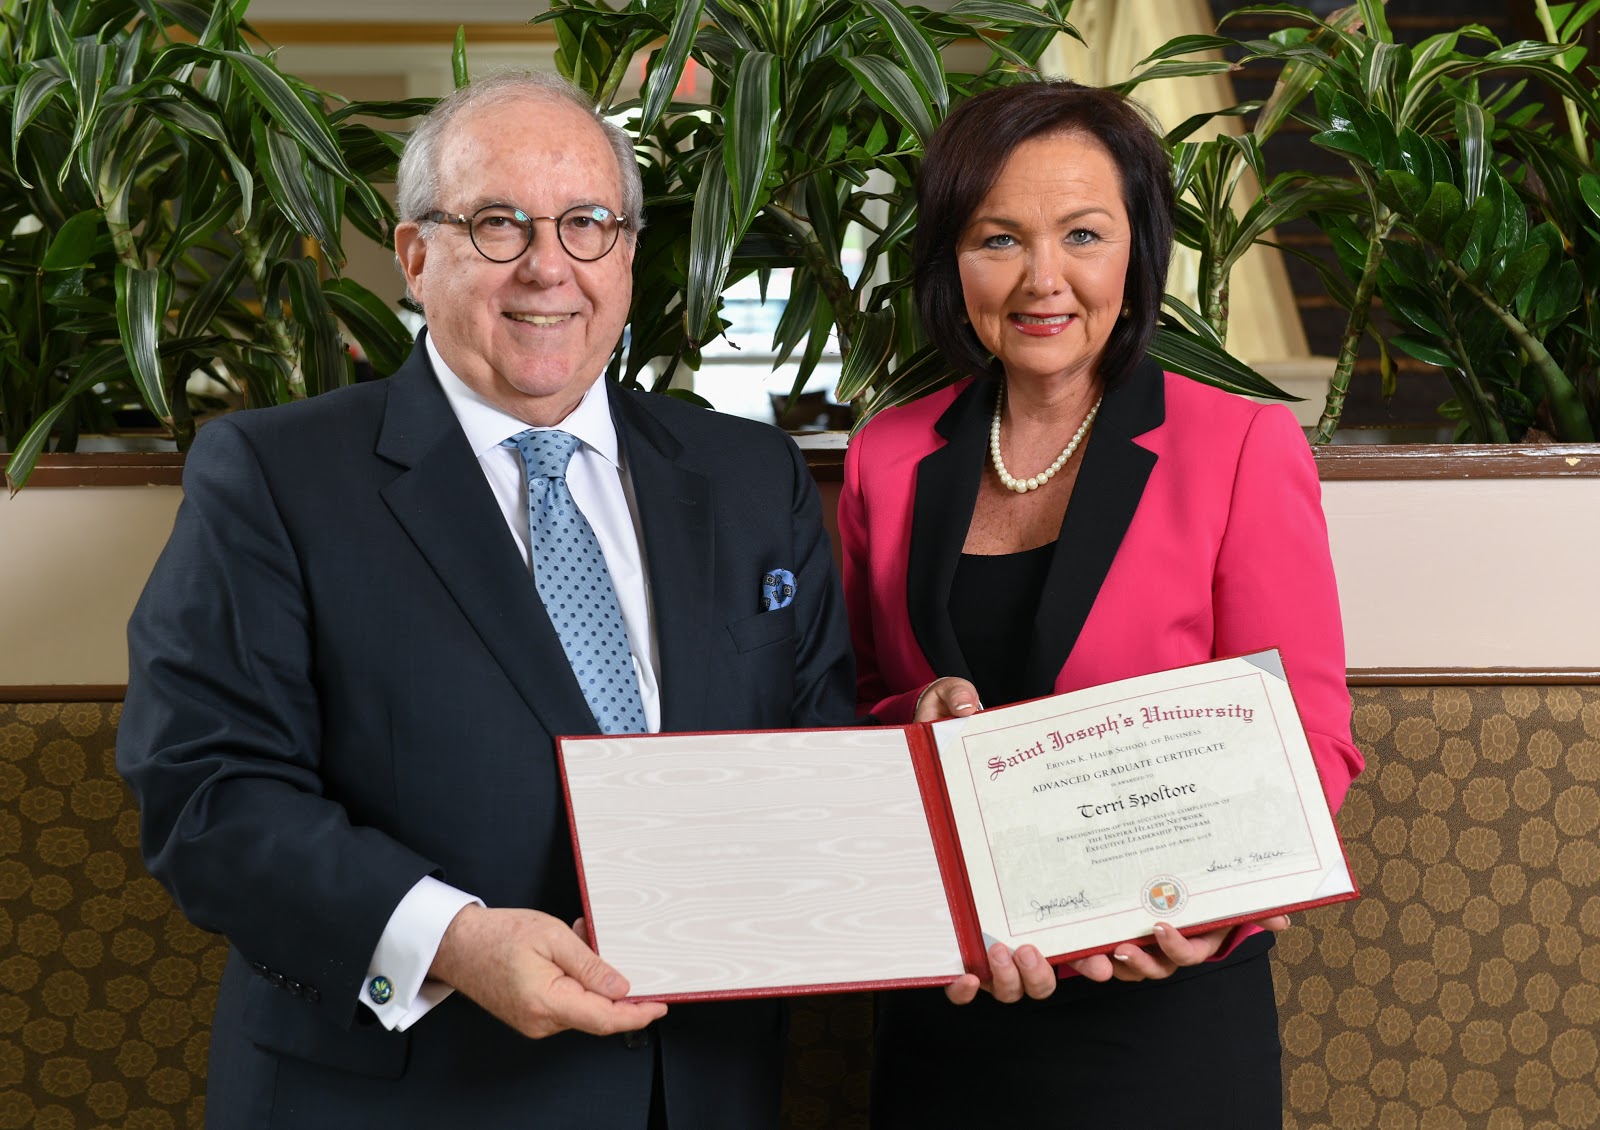 Spoltore receiving her certificate with Joseph A. DiAngelo '70, Ed.D., Dean of the Erivan K. Haub School of Business